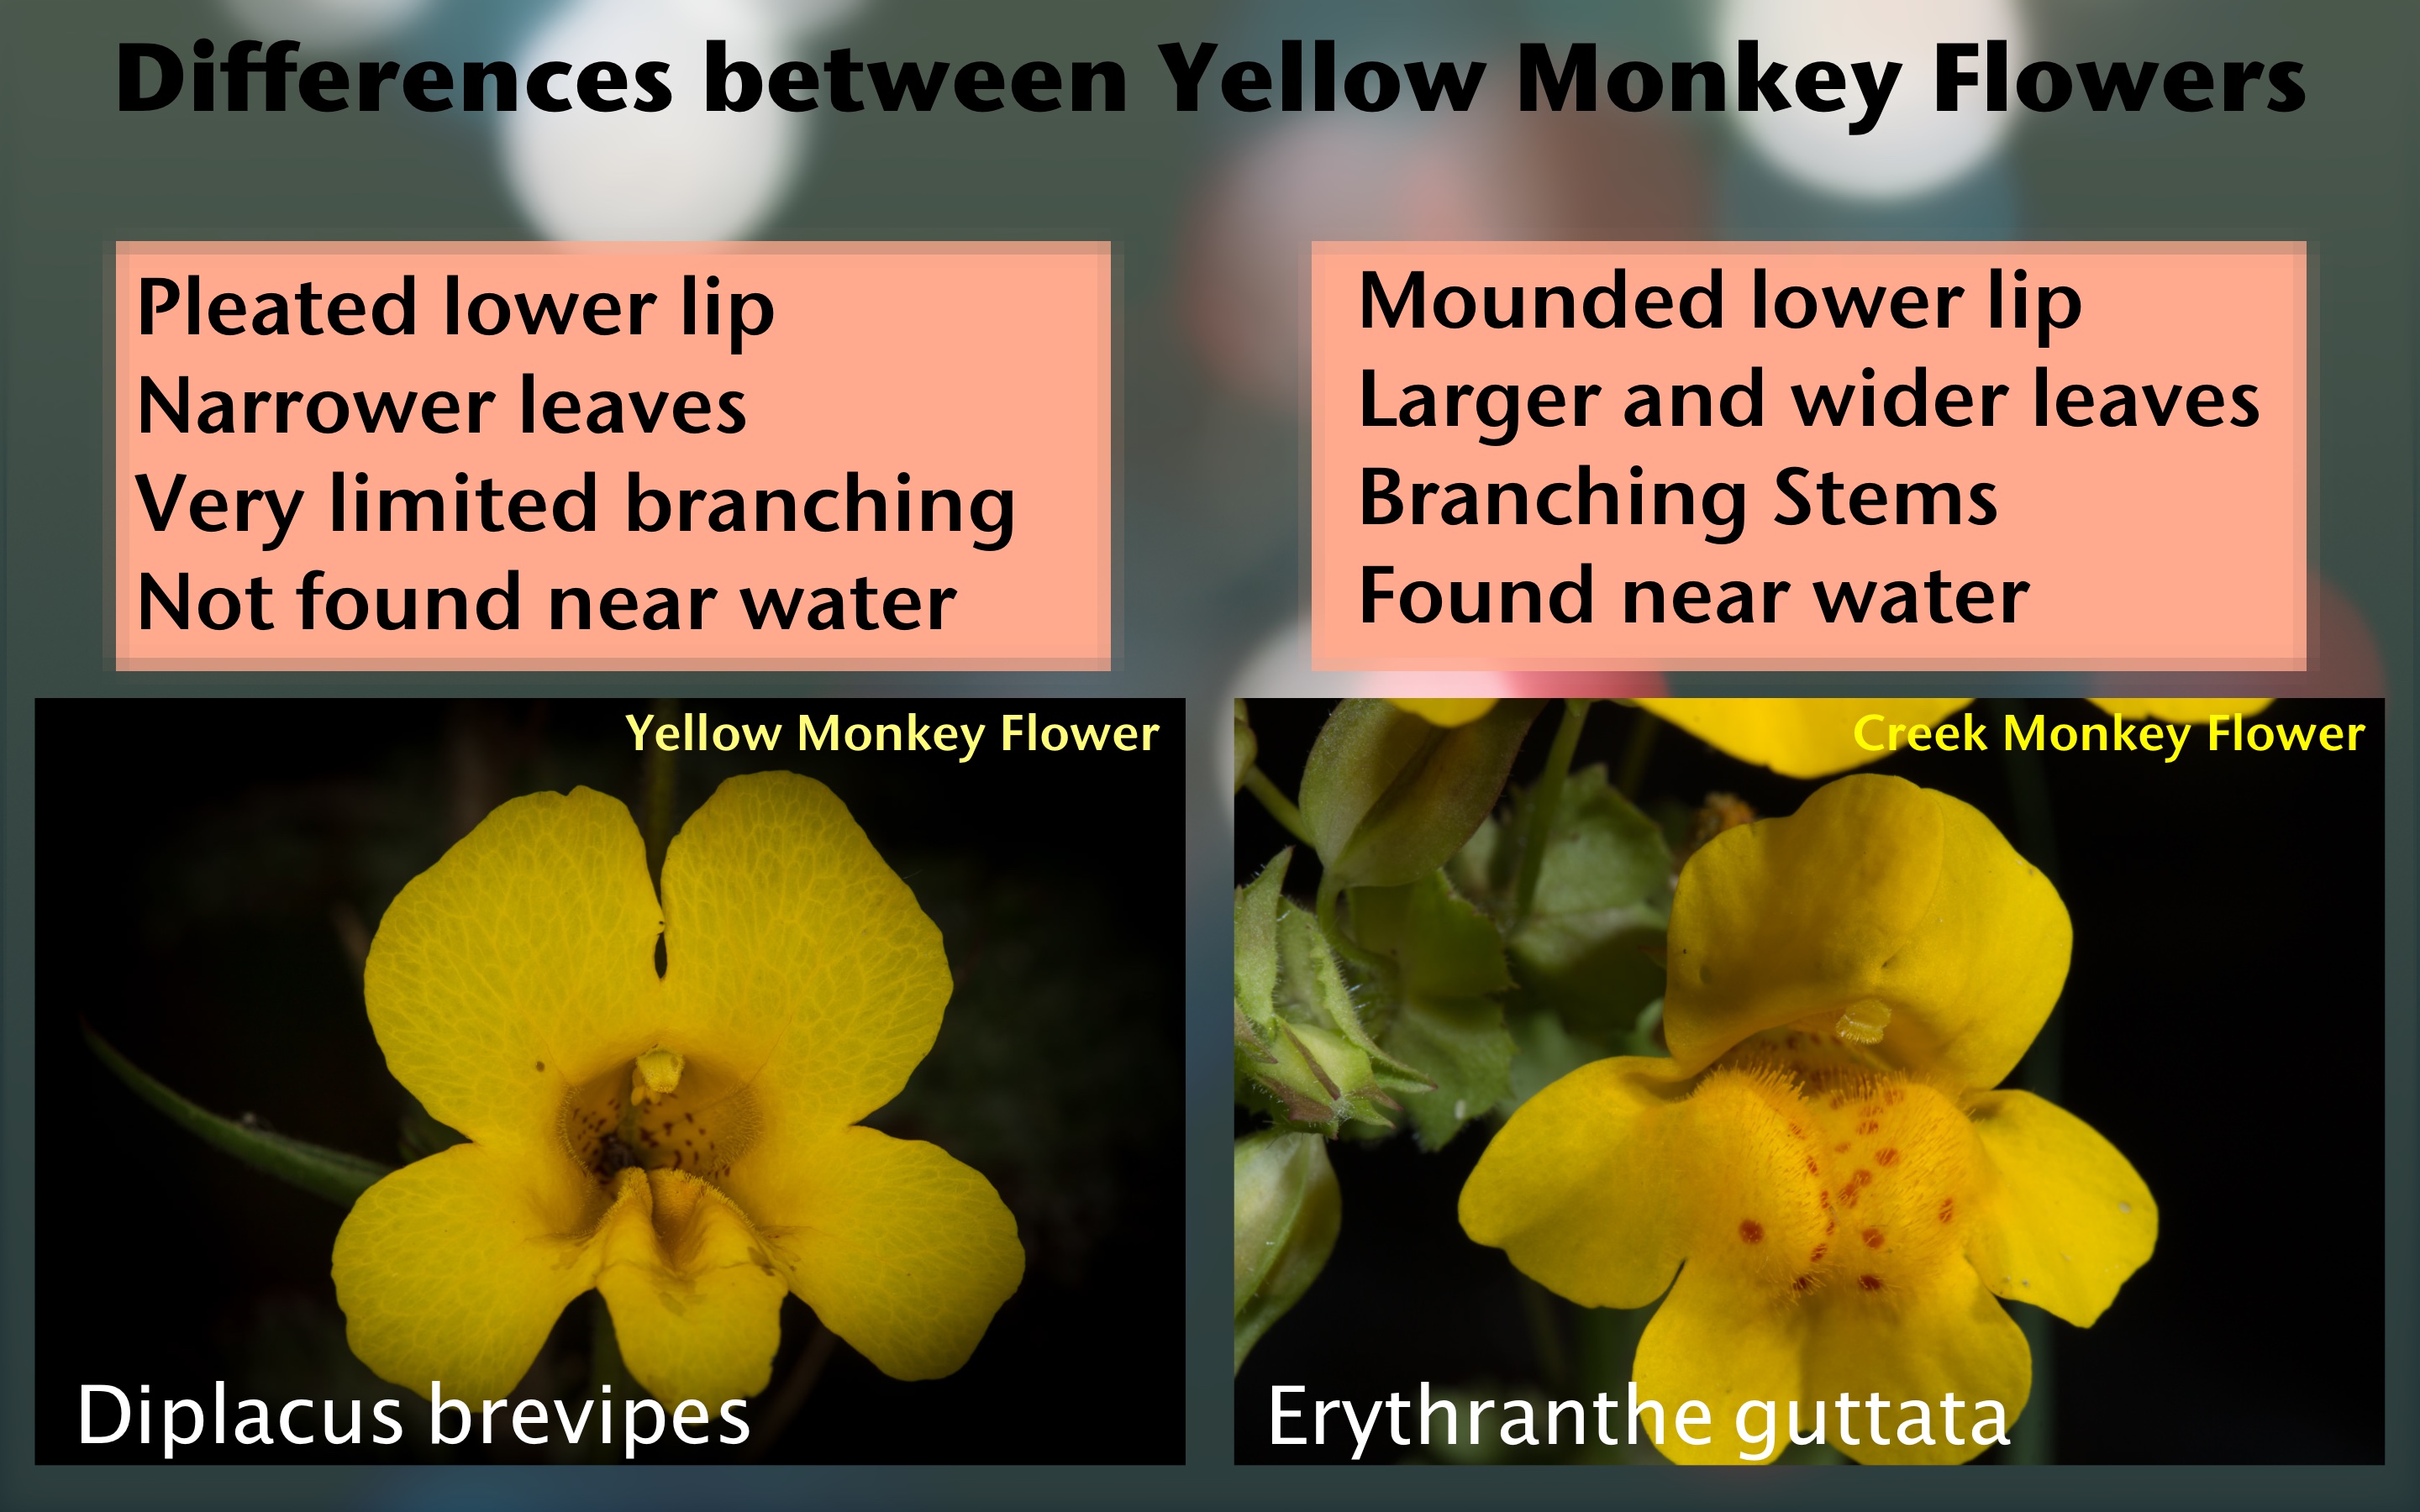 Comparison of Flowers